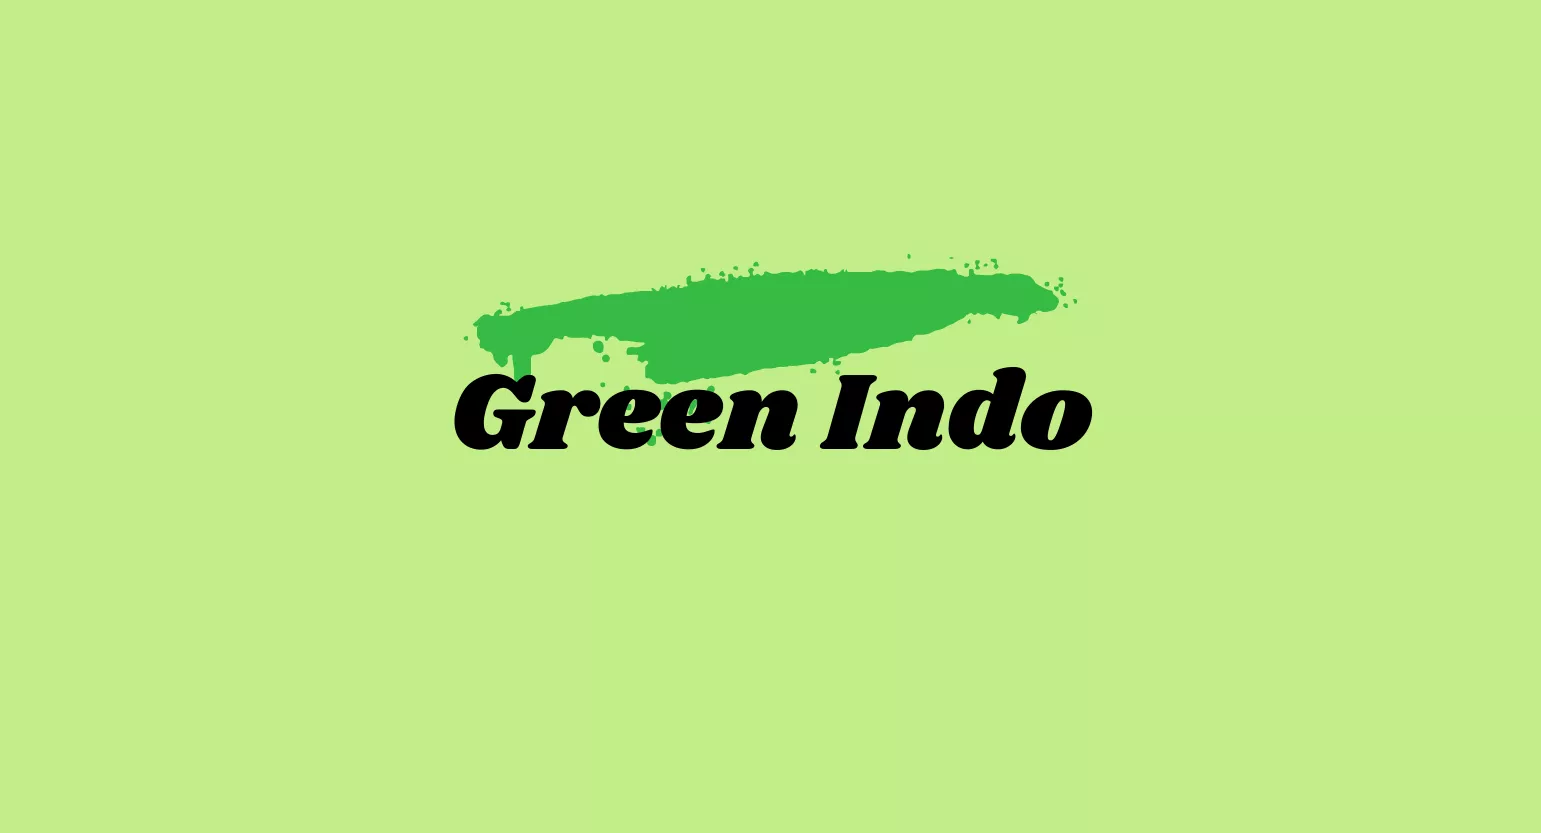 Green Indo Kratom: Dosage, Effects, Safety & More